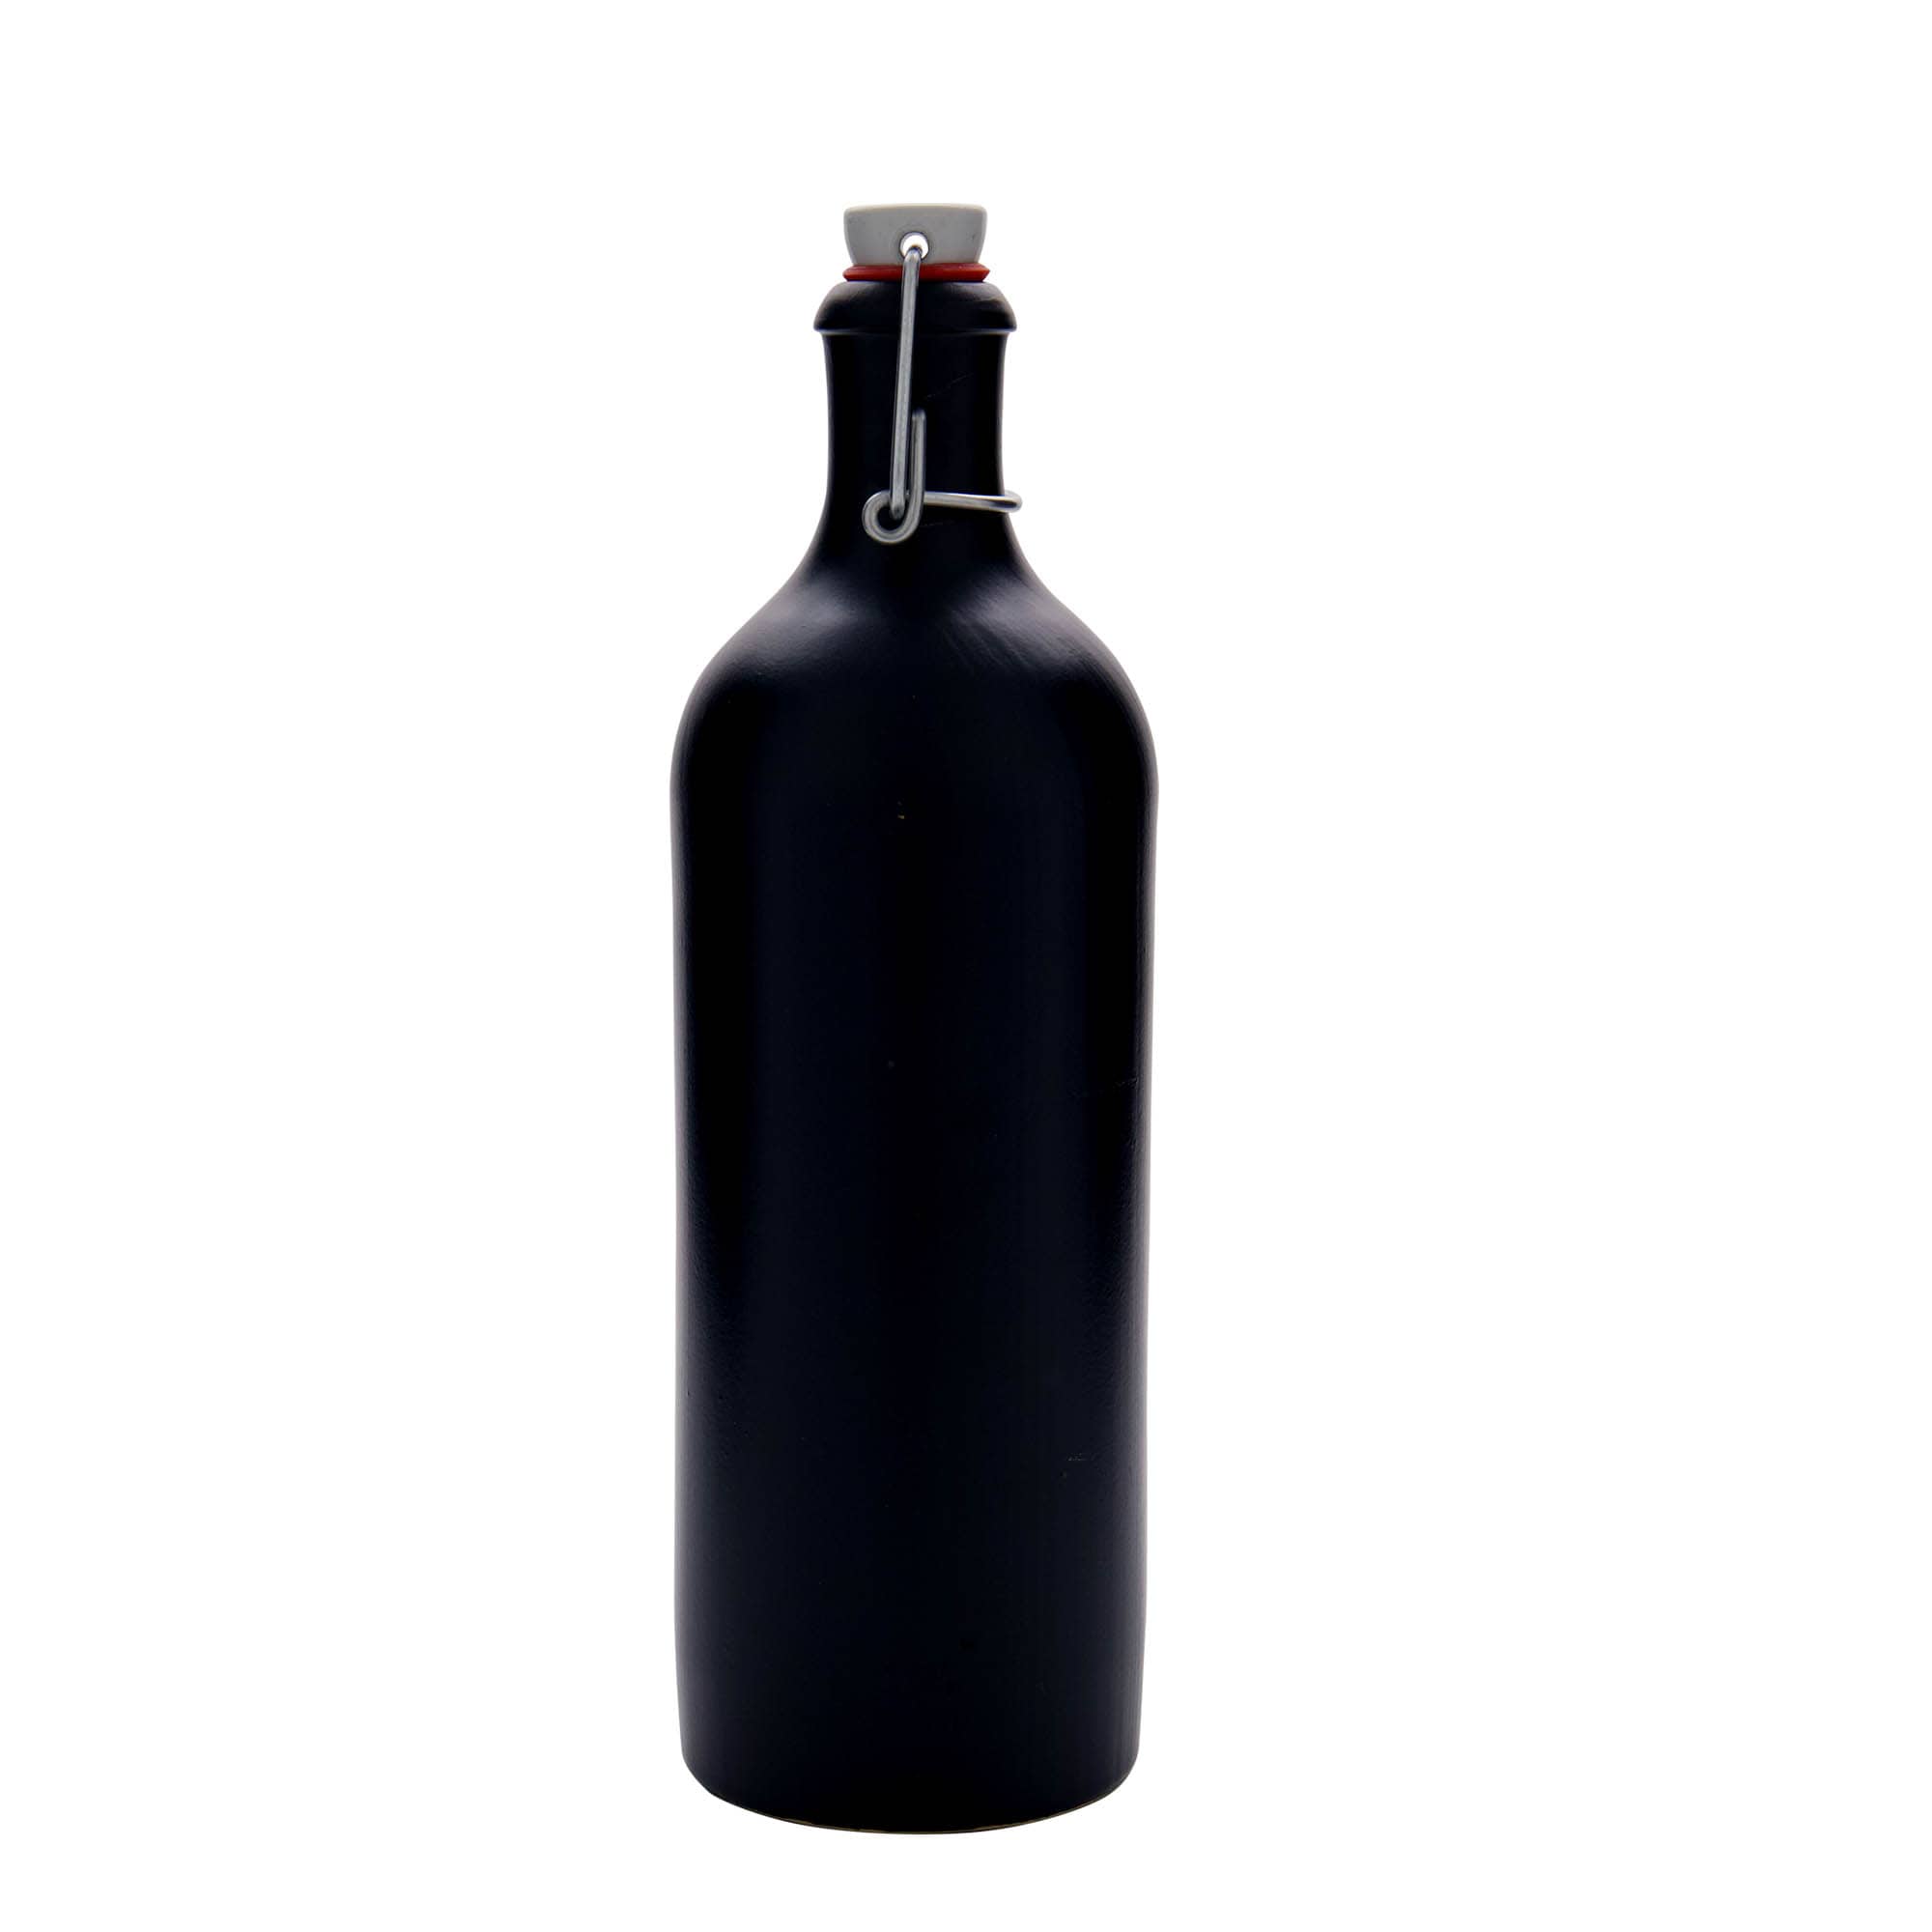 750 ml earthen jug, stoneware, black, closure: swing top